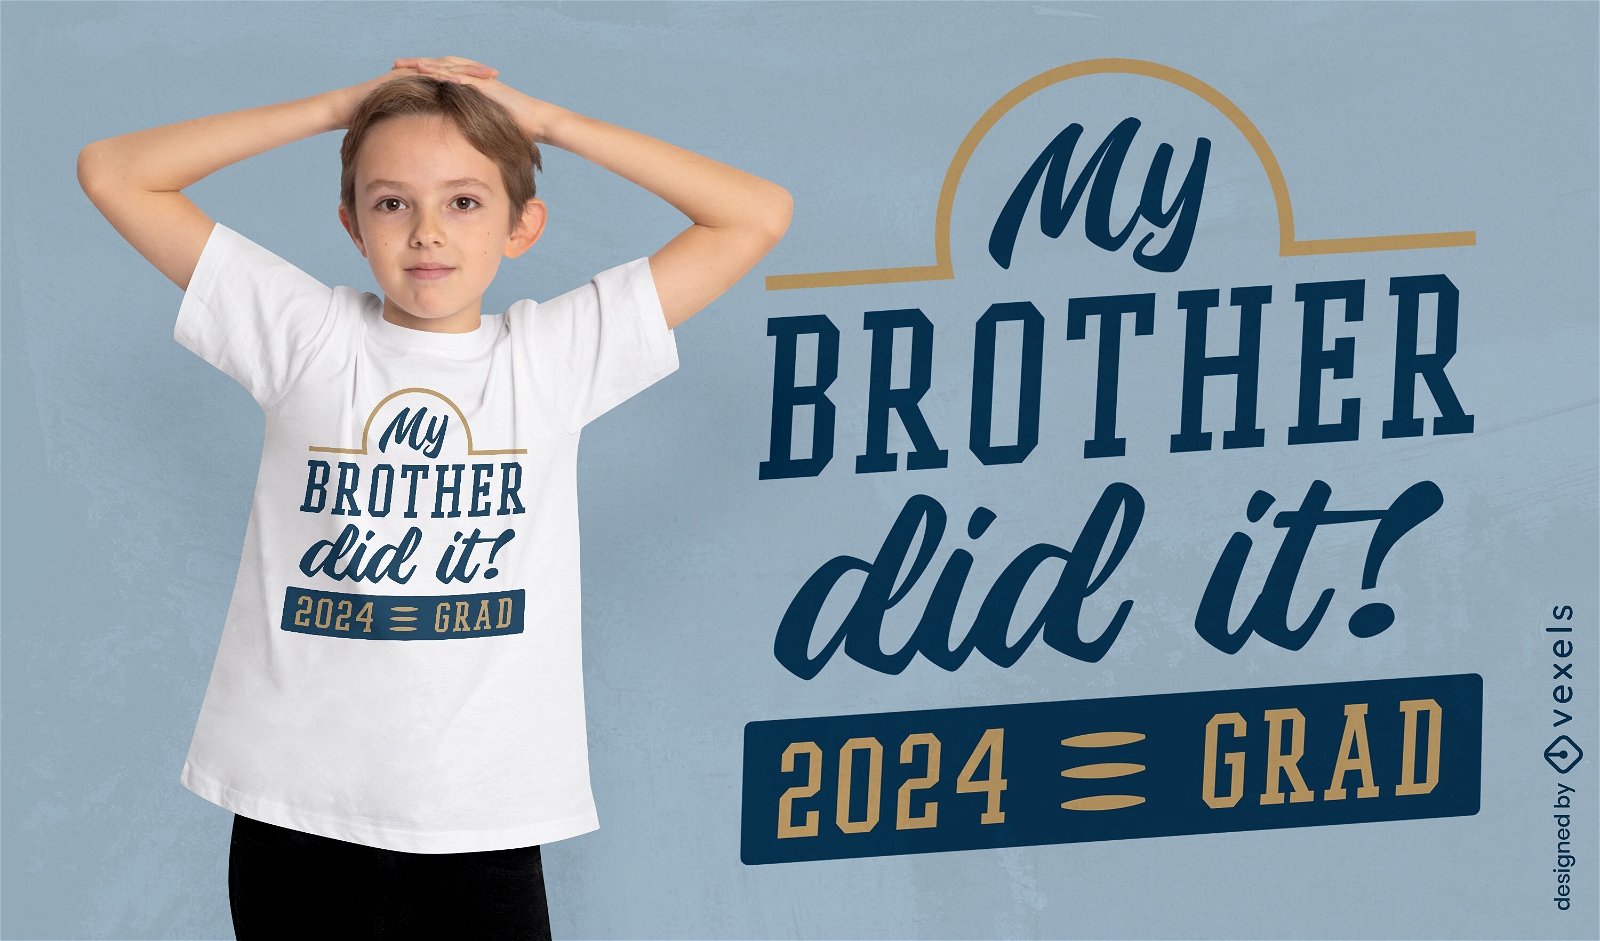 Brother graduation celebration t-shirt design